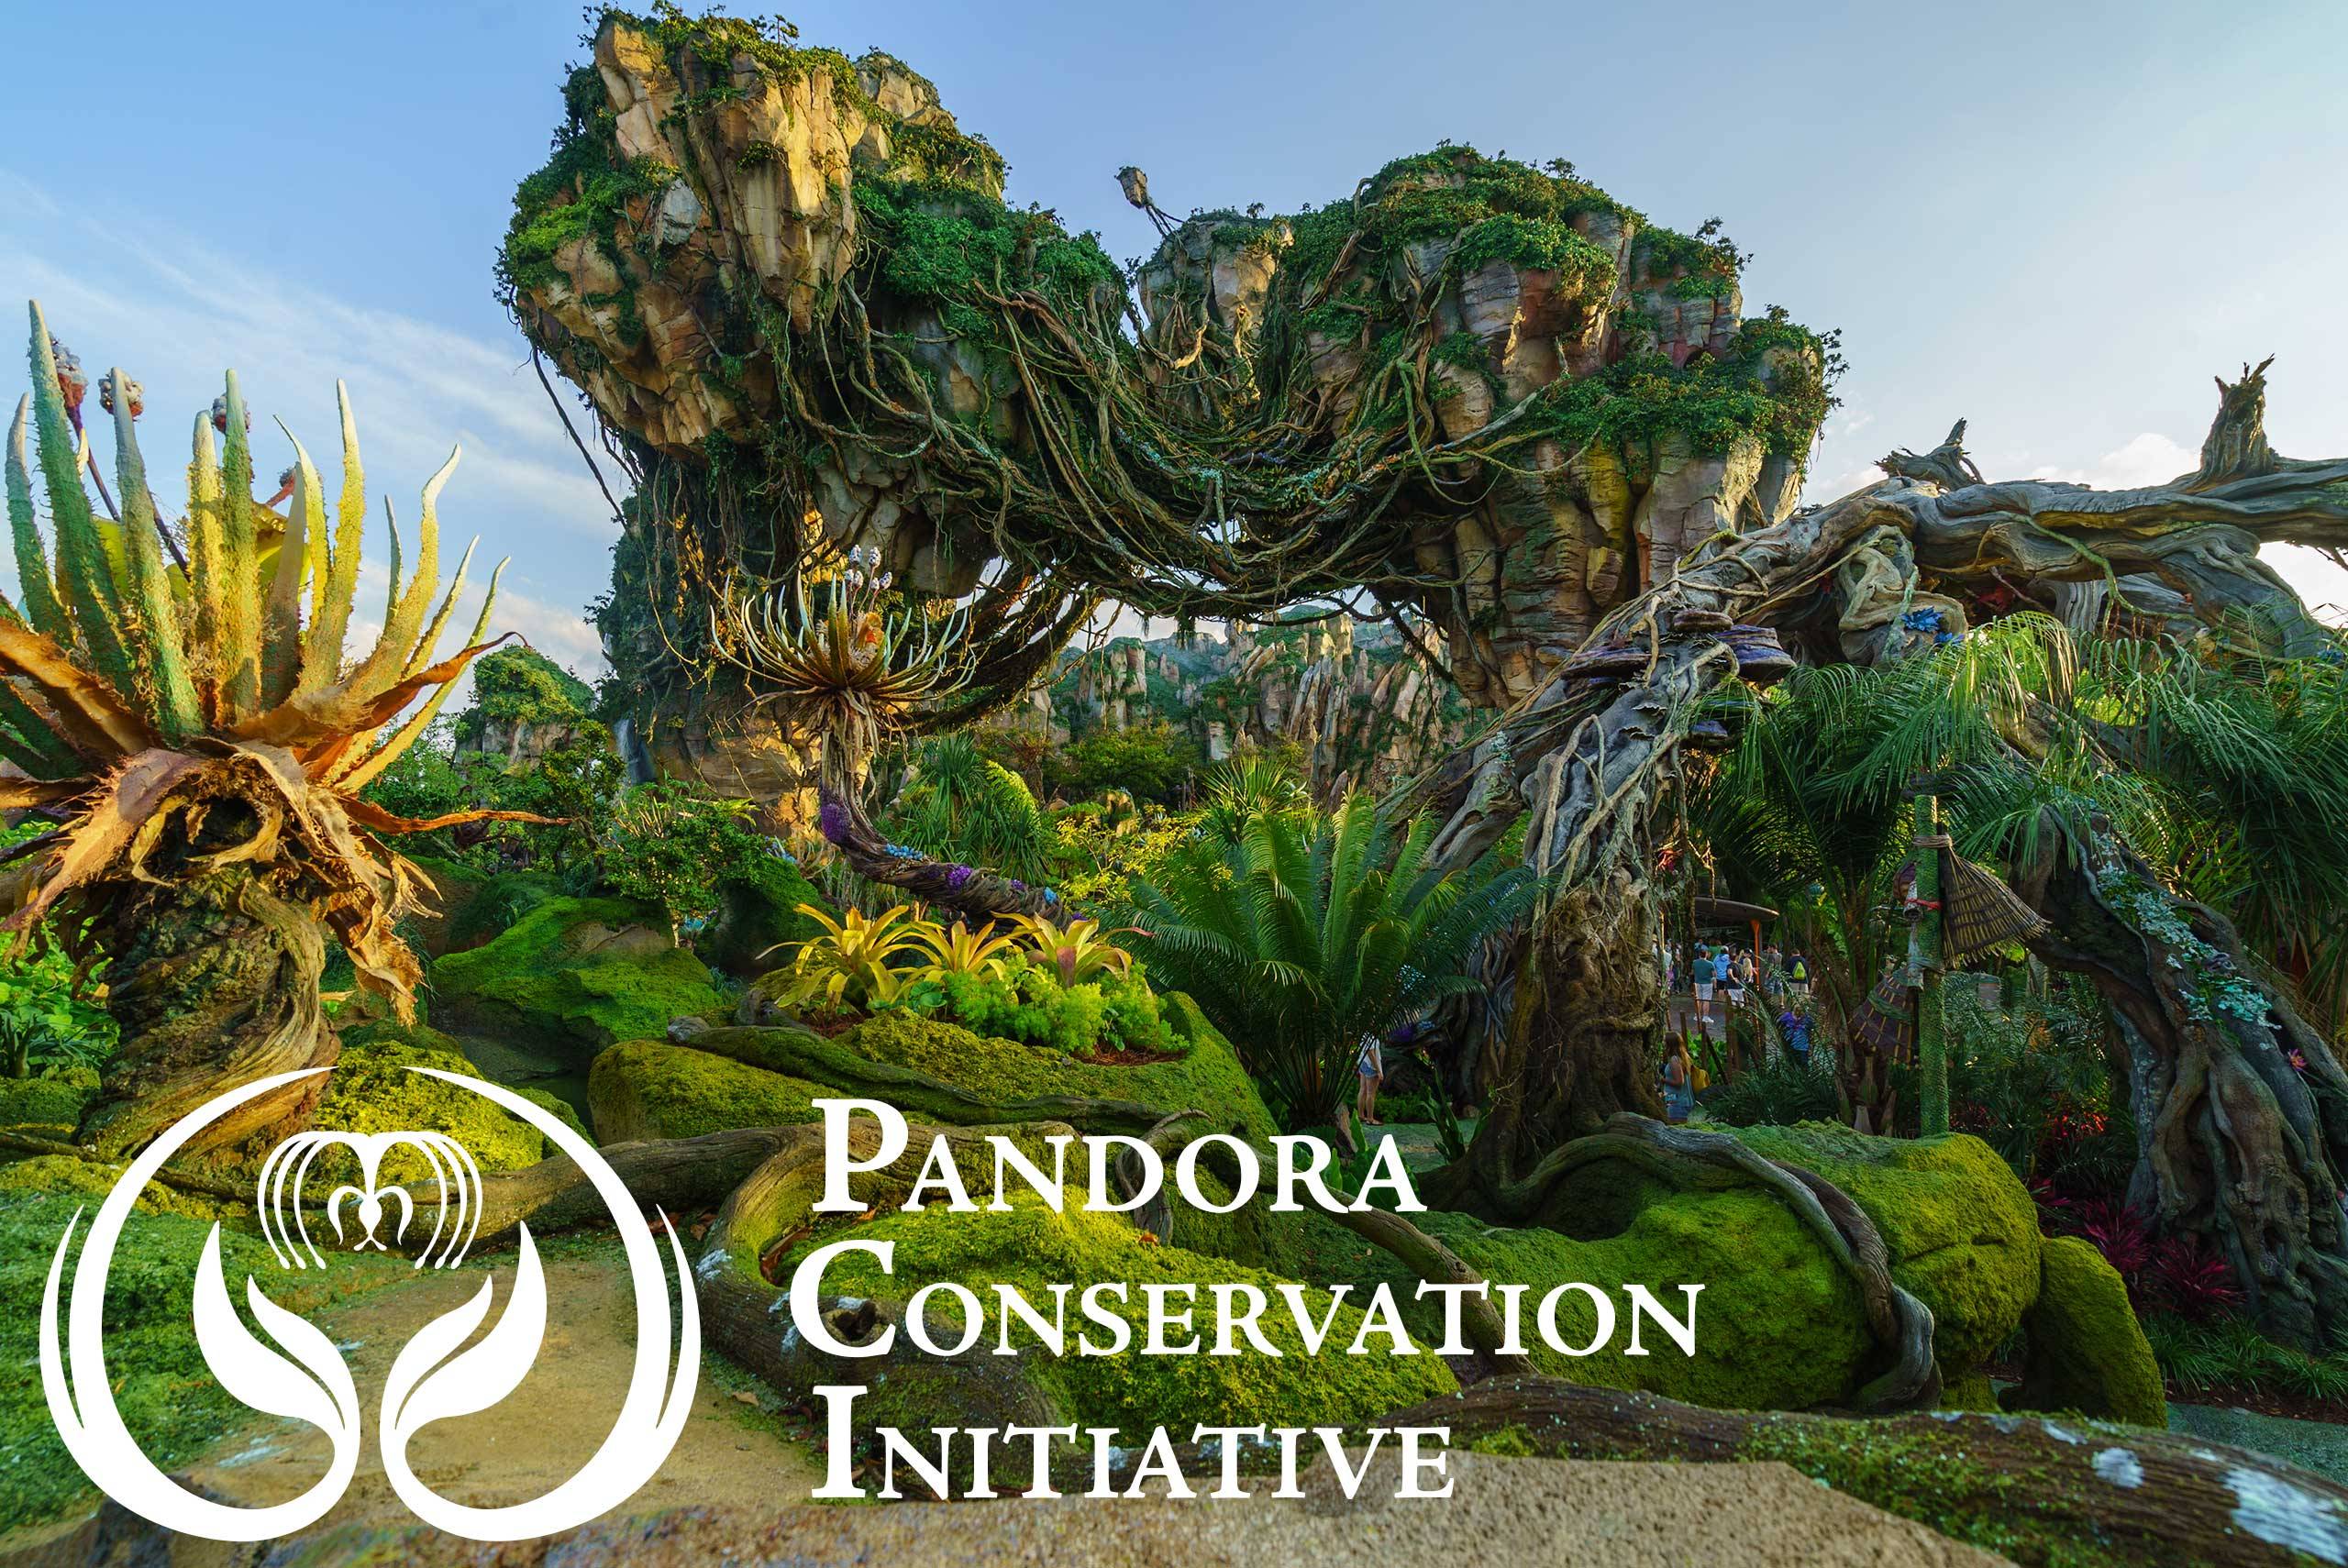 The Pandora Conservation Intiative